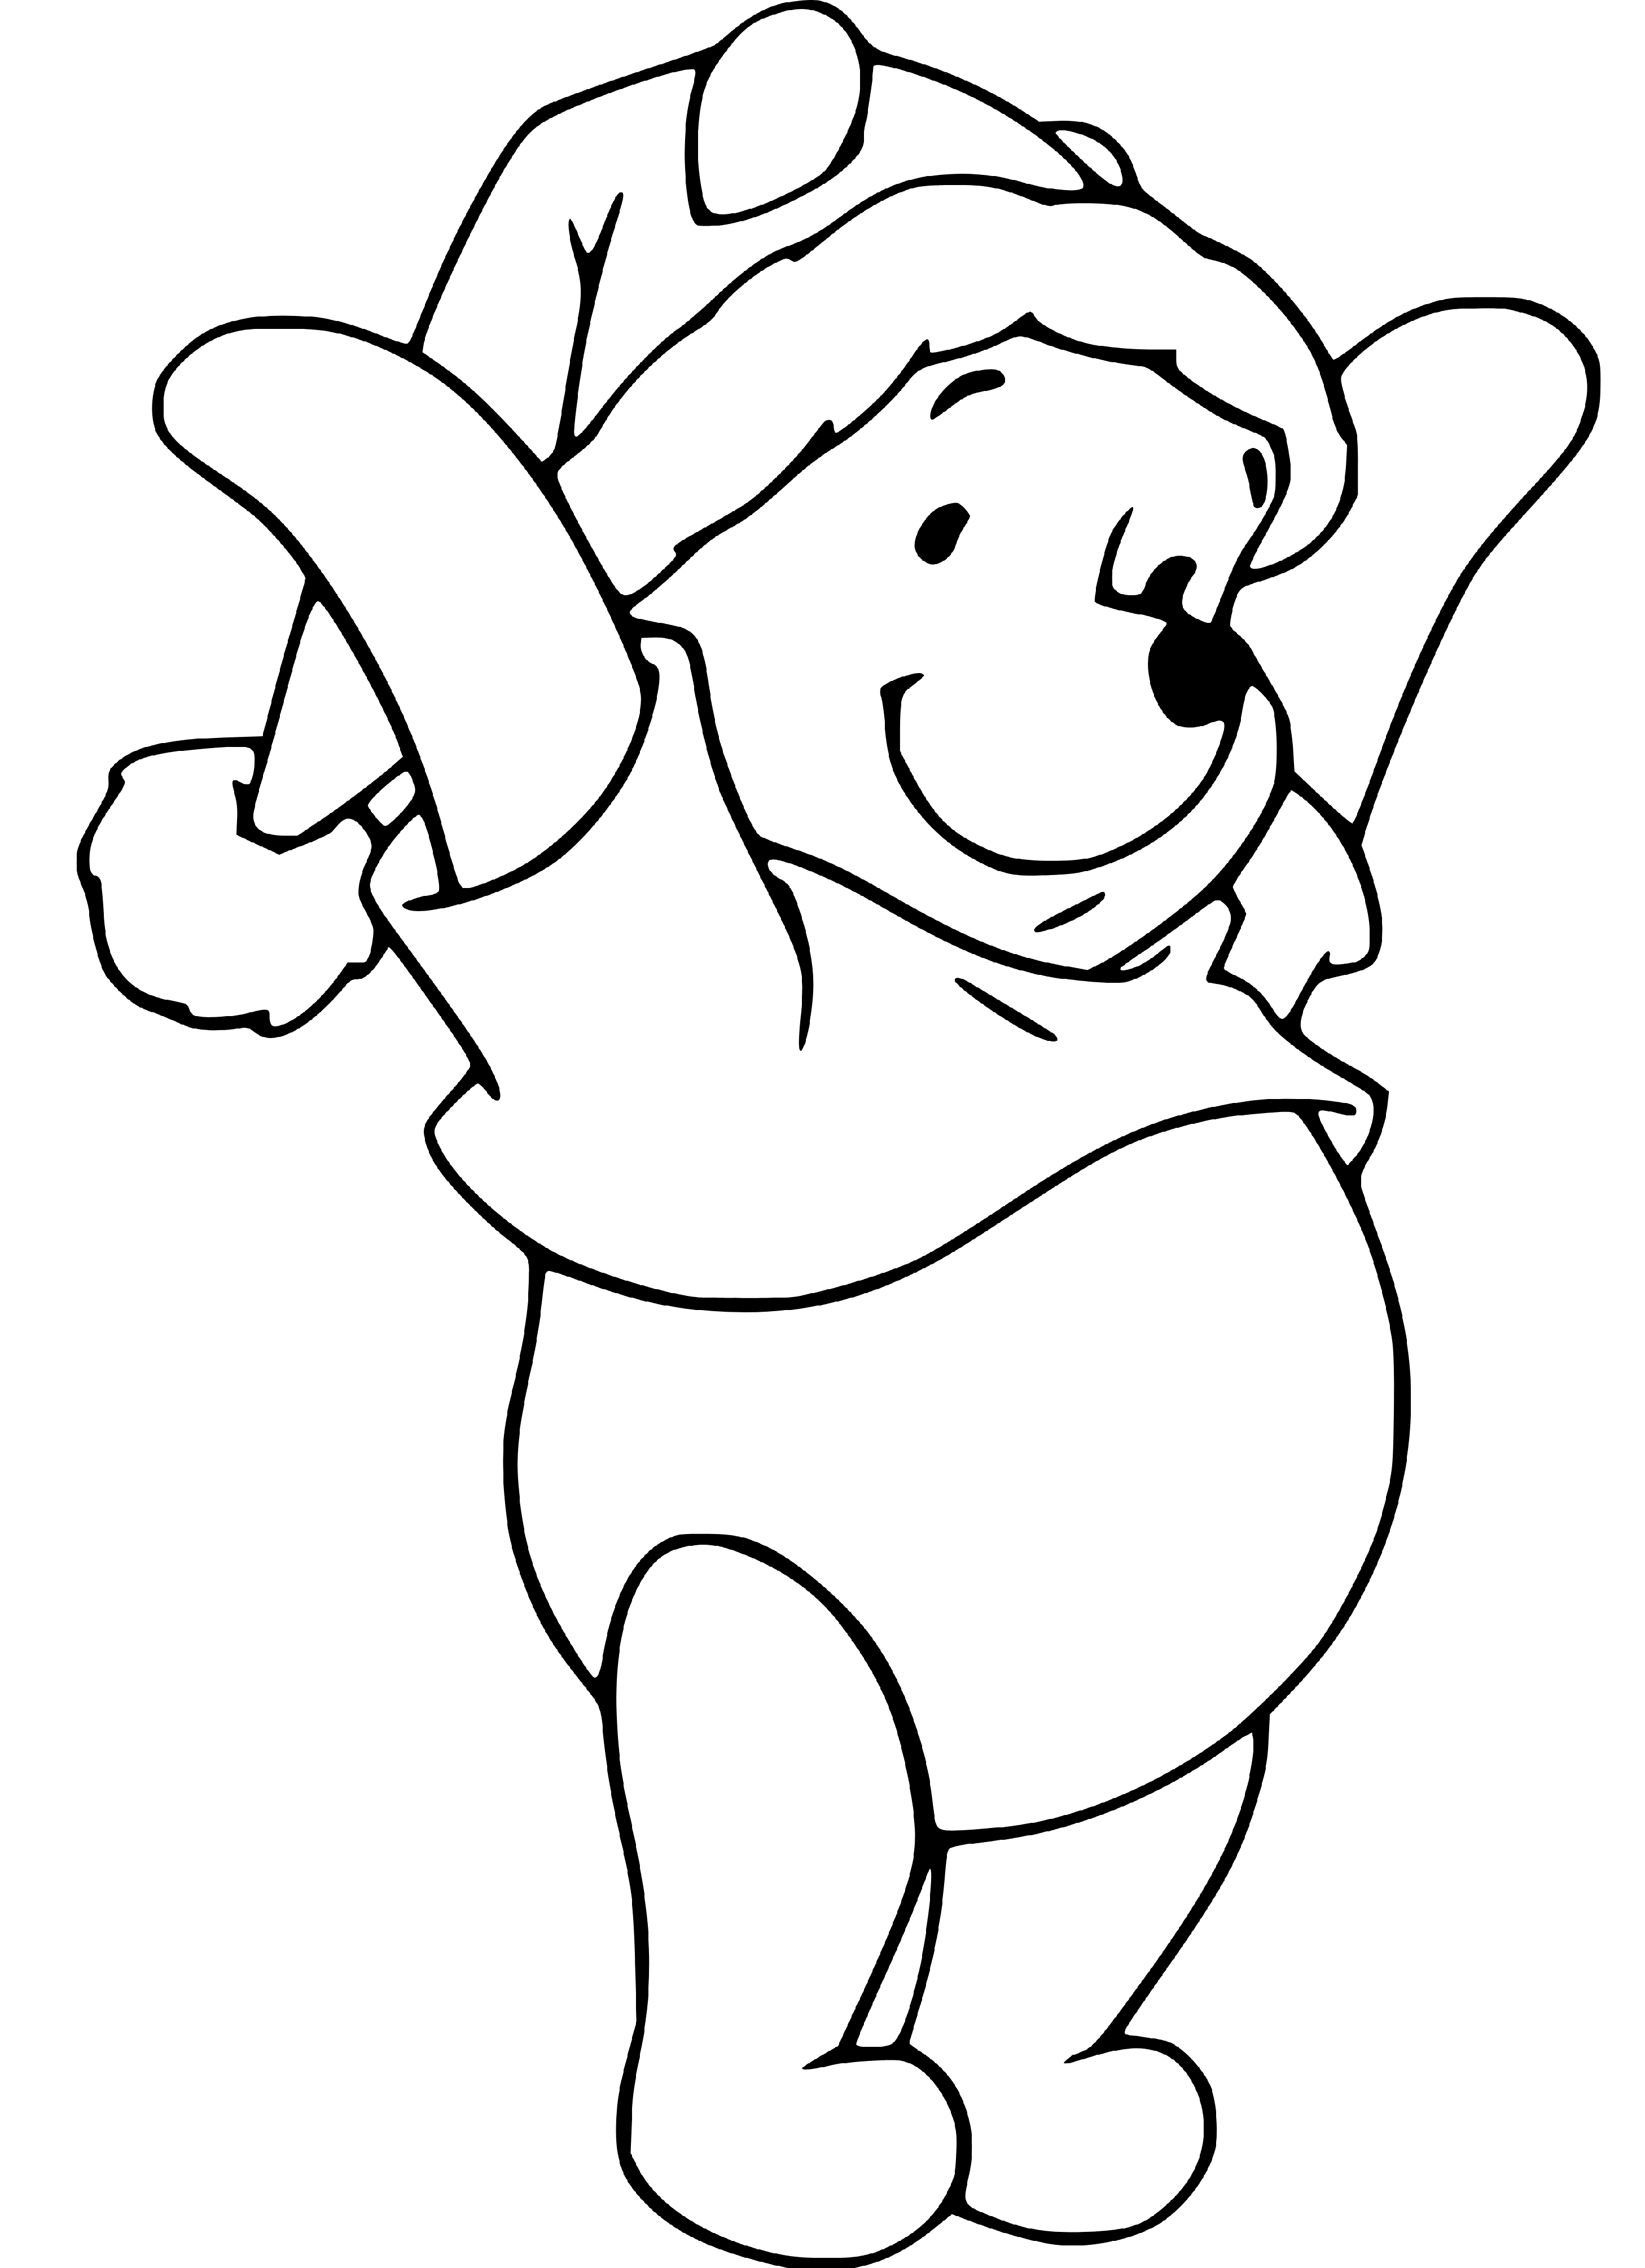 Winnie The Pooh Christmas Coloring Page for Kids Printable - SheetalColor.com